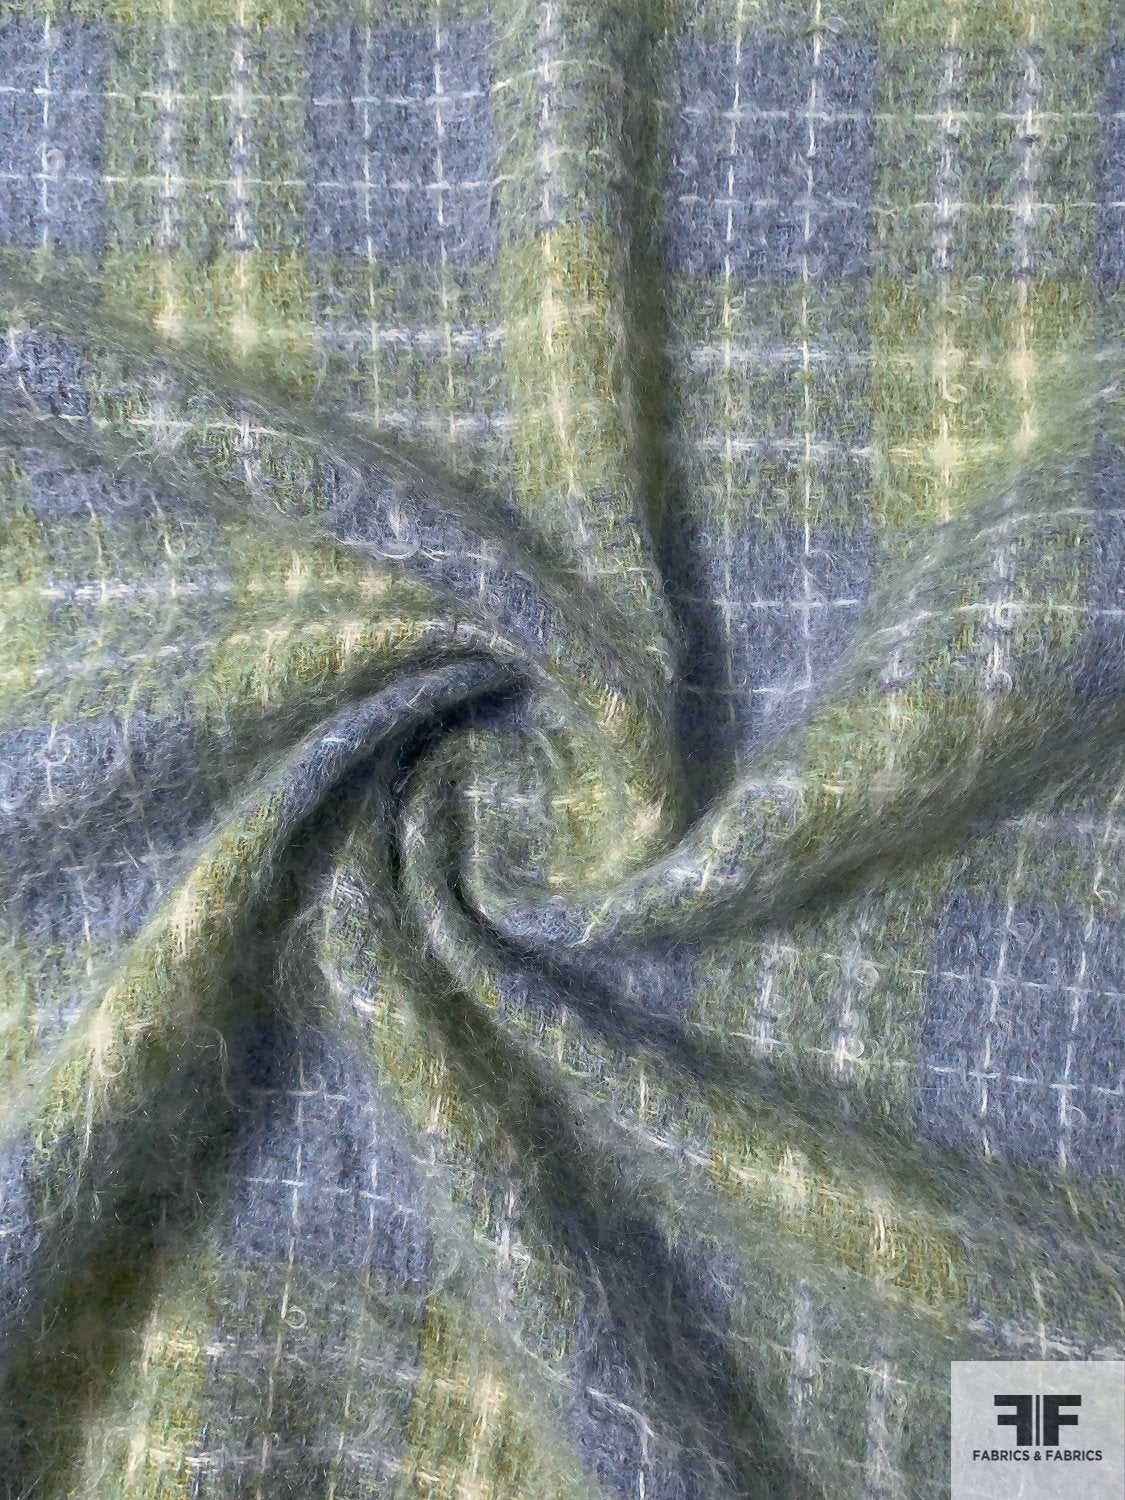 Italian Plaid Lightweight Wool-Mohair  Coating - Dusty Sky Blue / Soft Green / Ivory